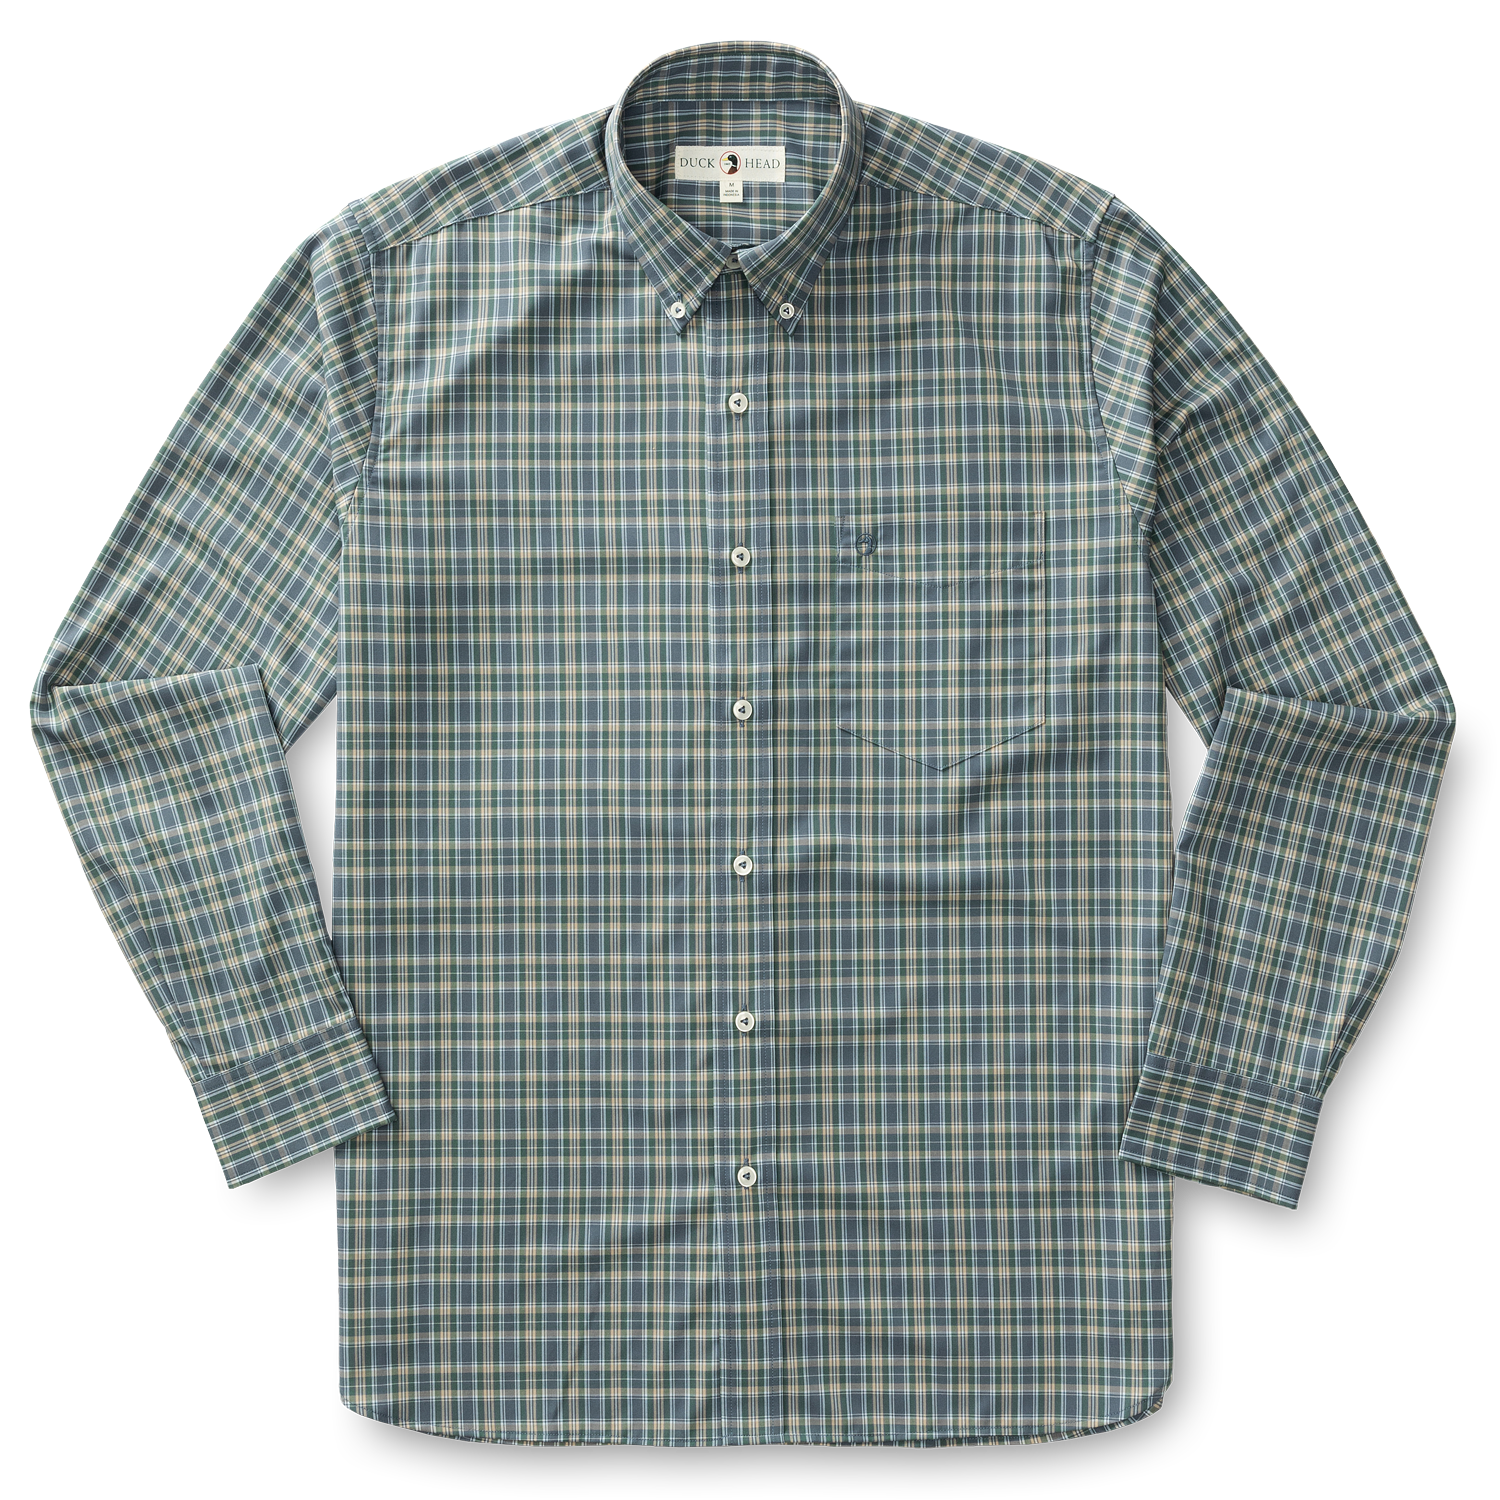 Ashwell Collar Shirt | Duck Head - Medium - Apparel